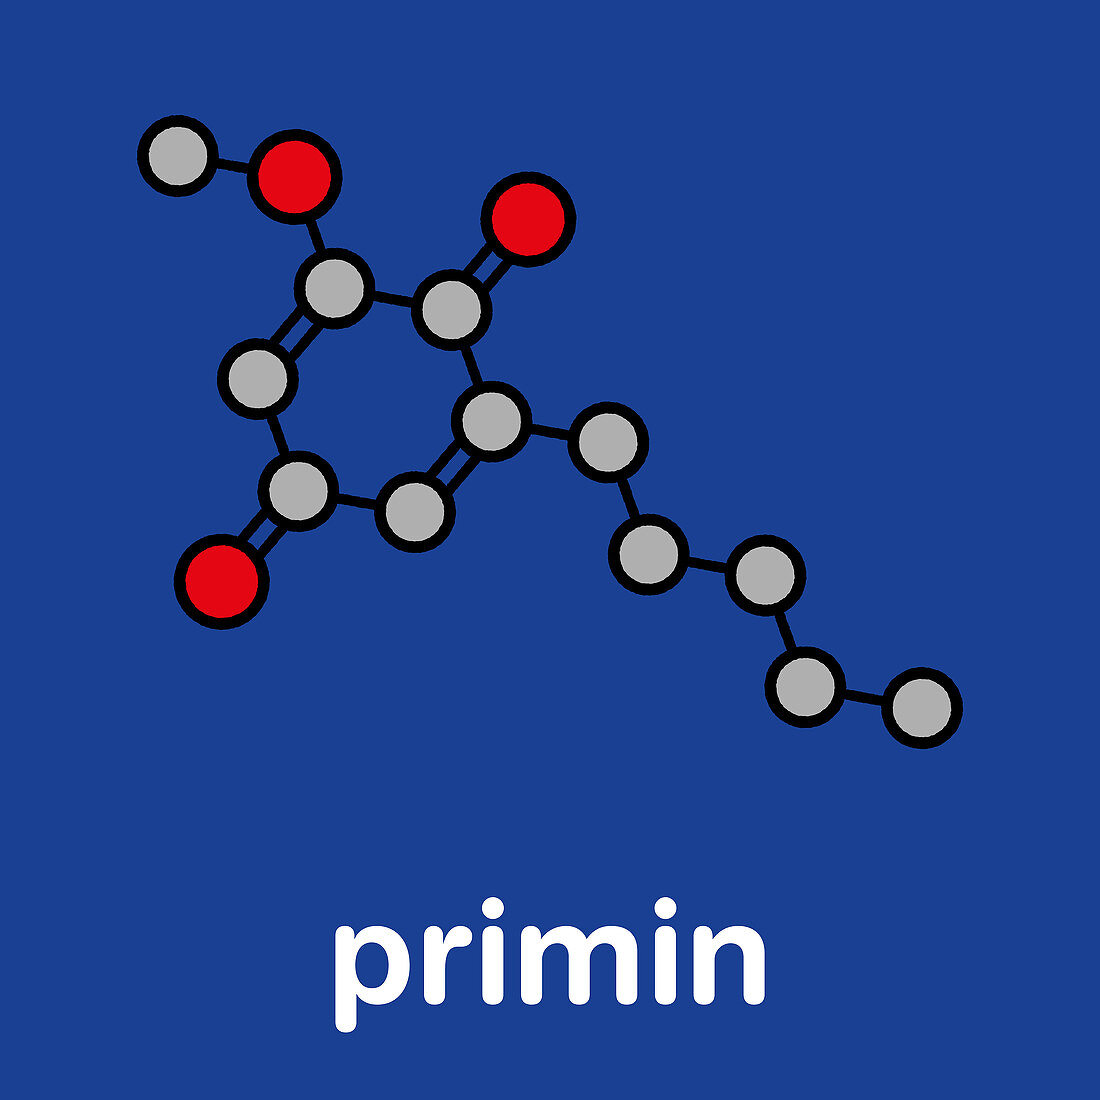 Primin primrose plant allergen molecule, illustration